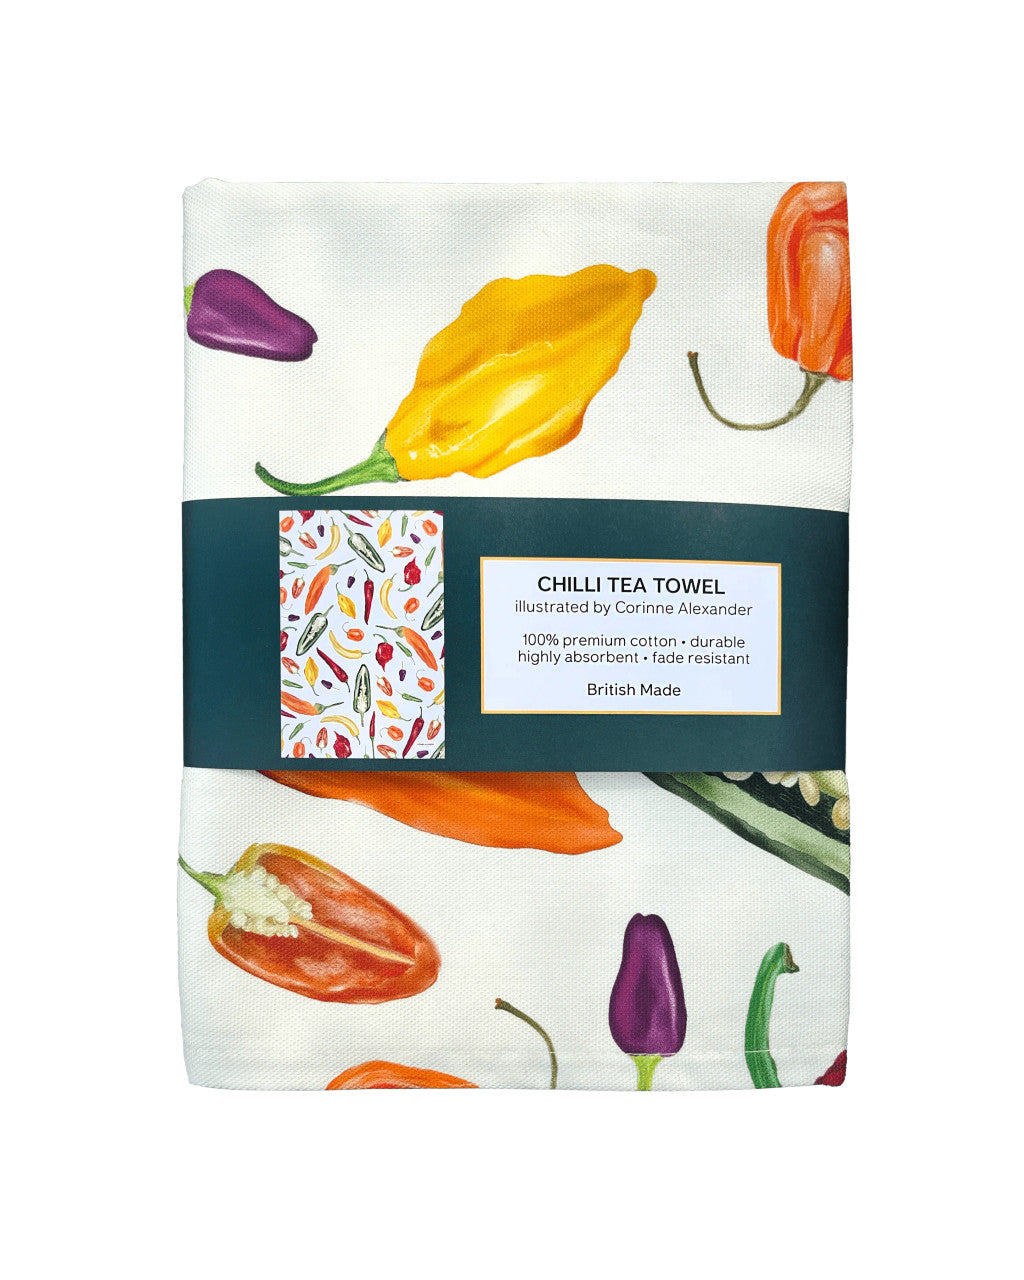 Chili Tea Towel by Corinne Alexander.